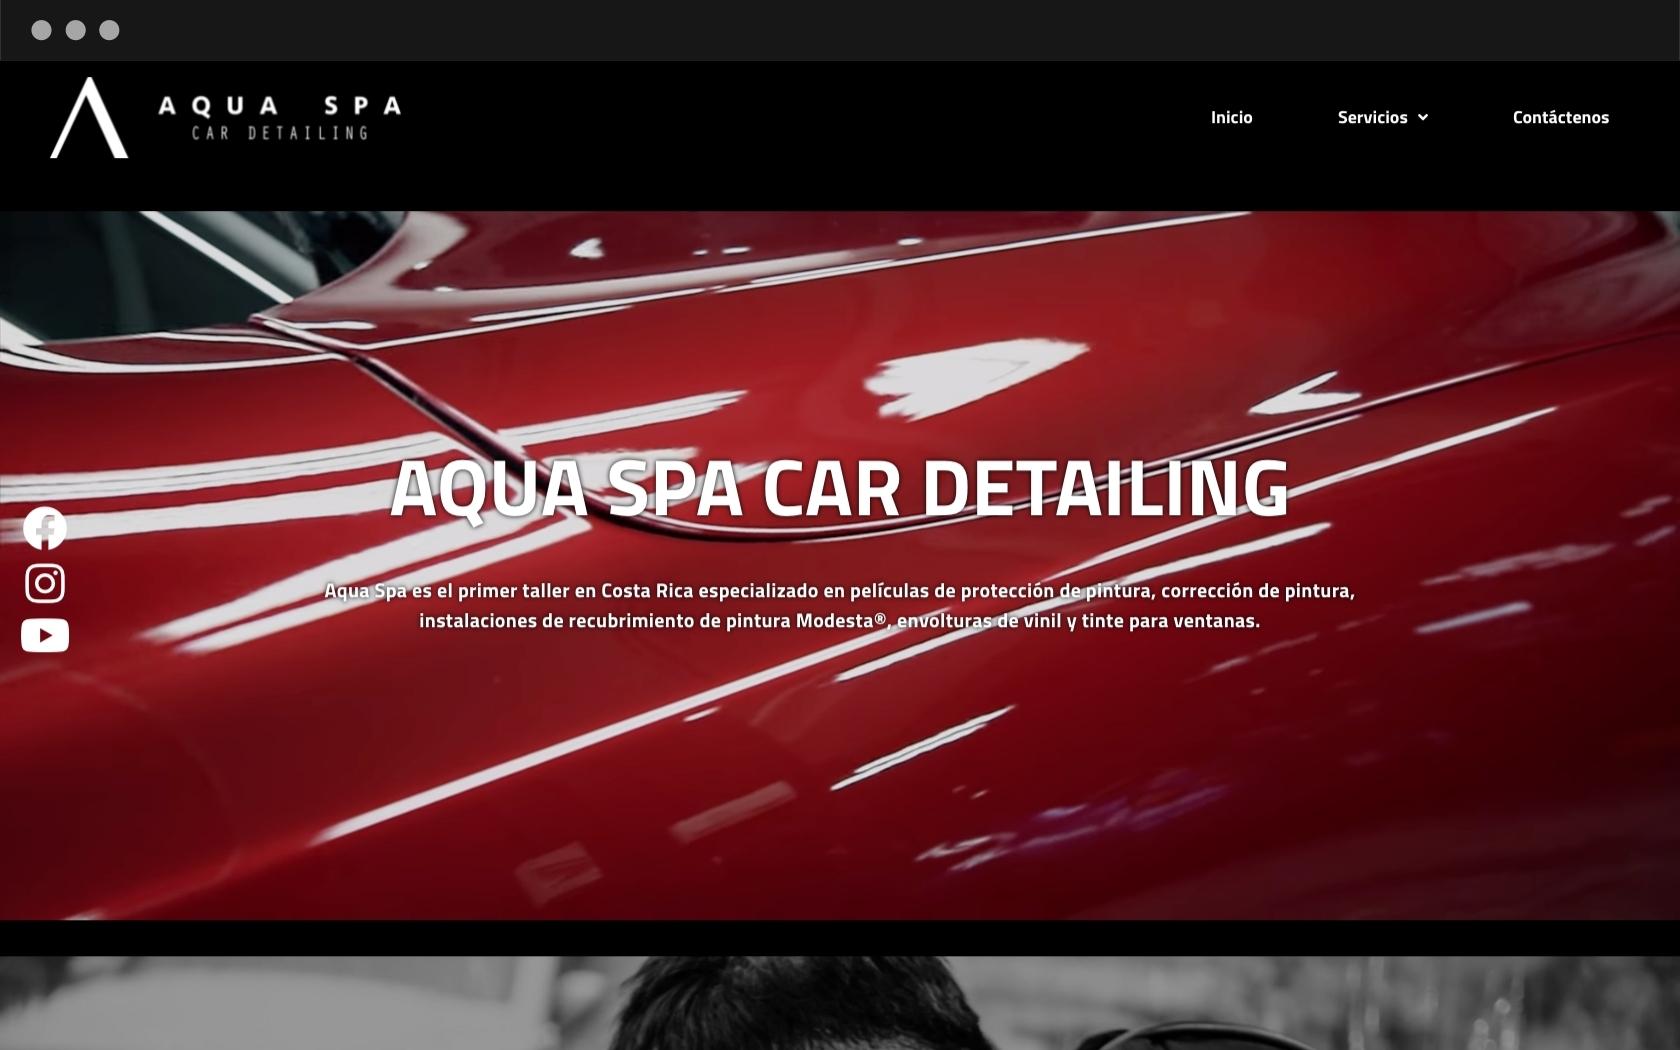 Aqua Spa's website design